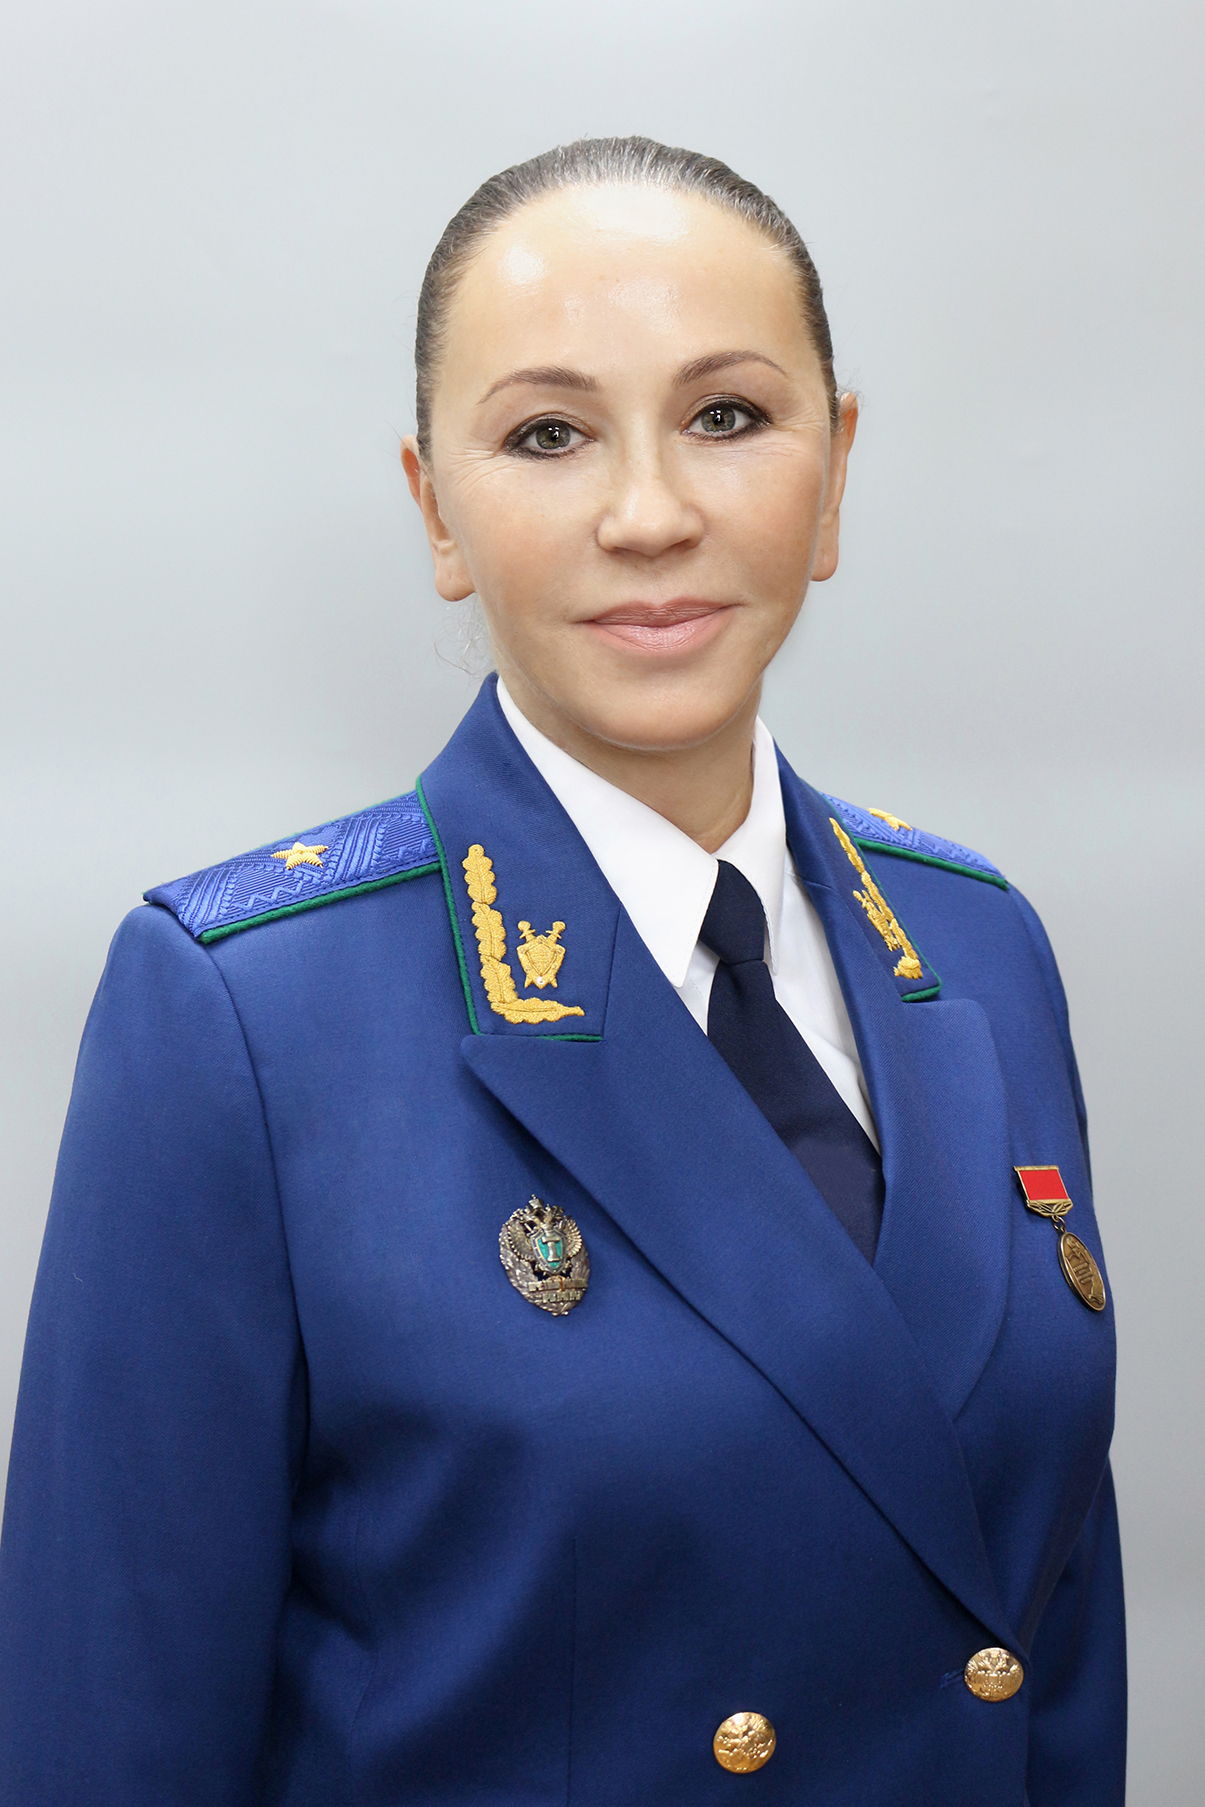             Пархоменко Светлана Валерьевна
    